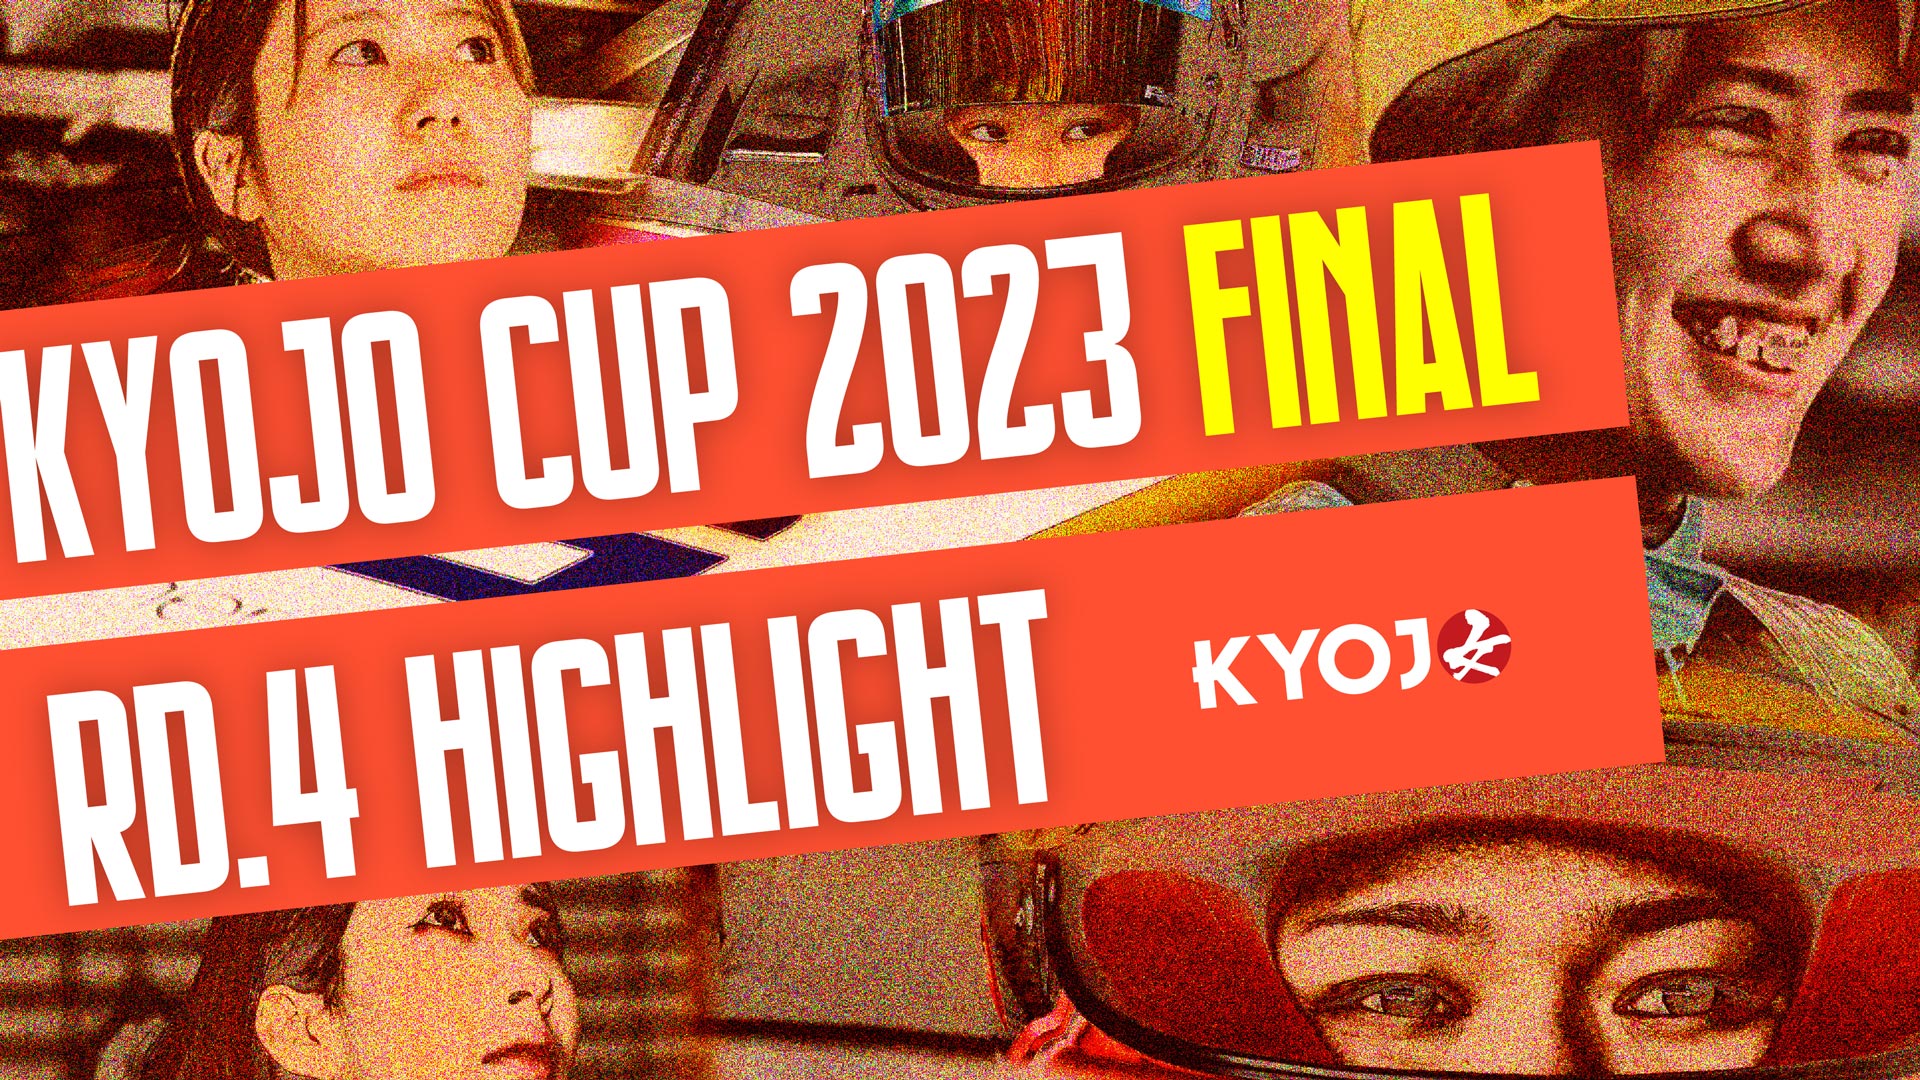 KYOJO CUP 2023 FINAL！Rd.4ハイライト